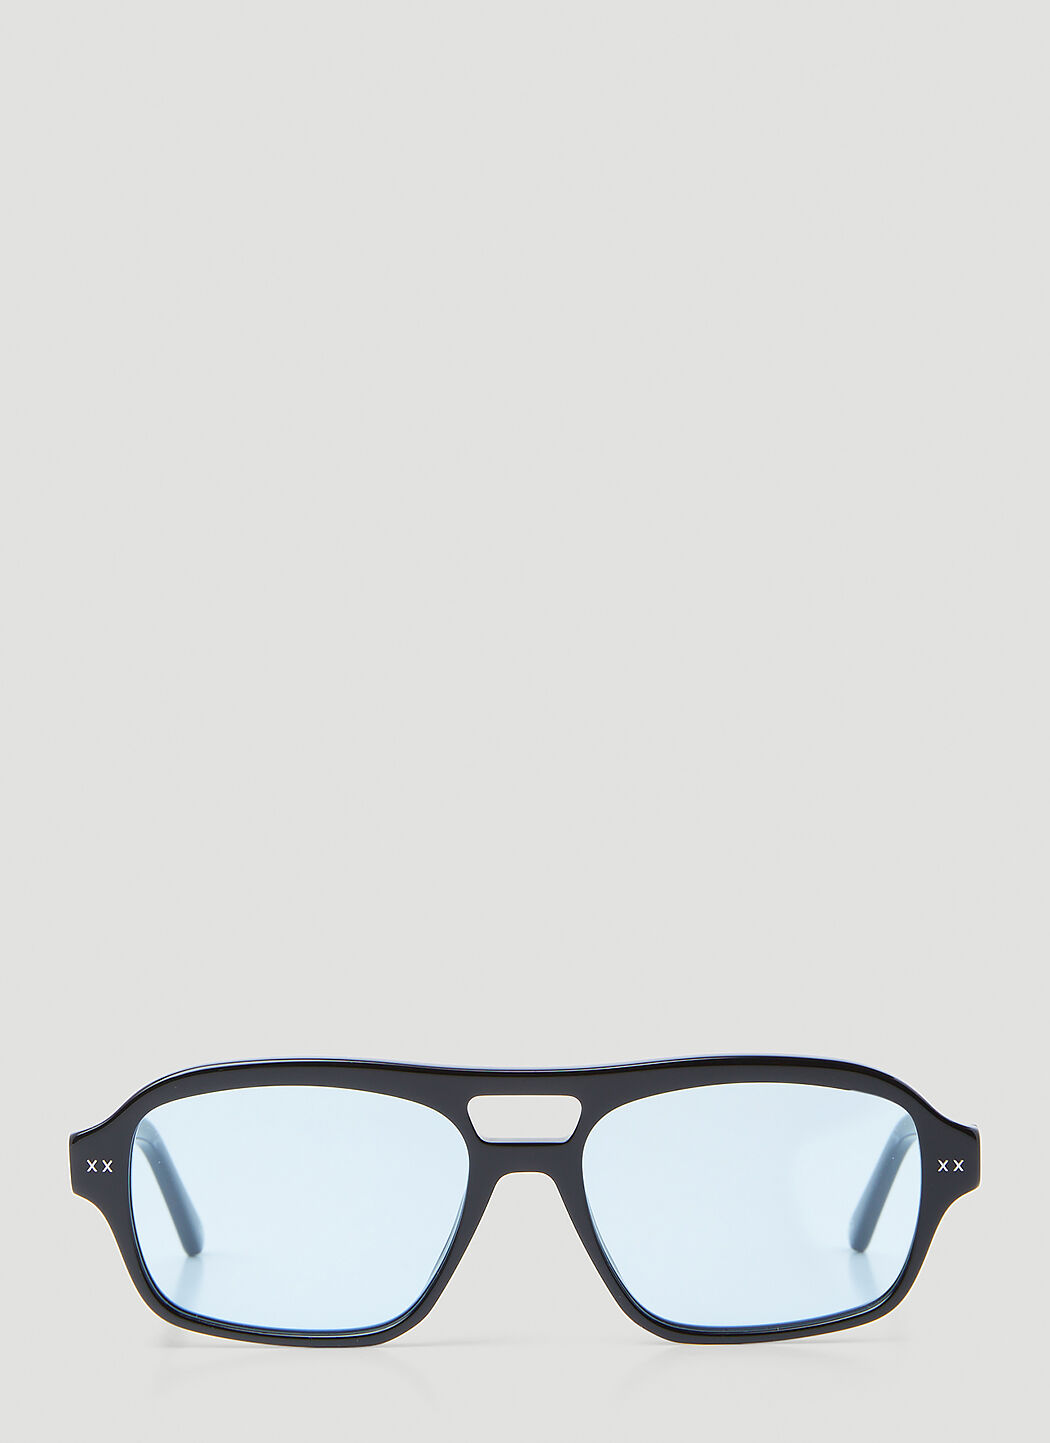 Lexxola Sunglasses for Women | LN-CC®